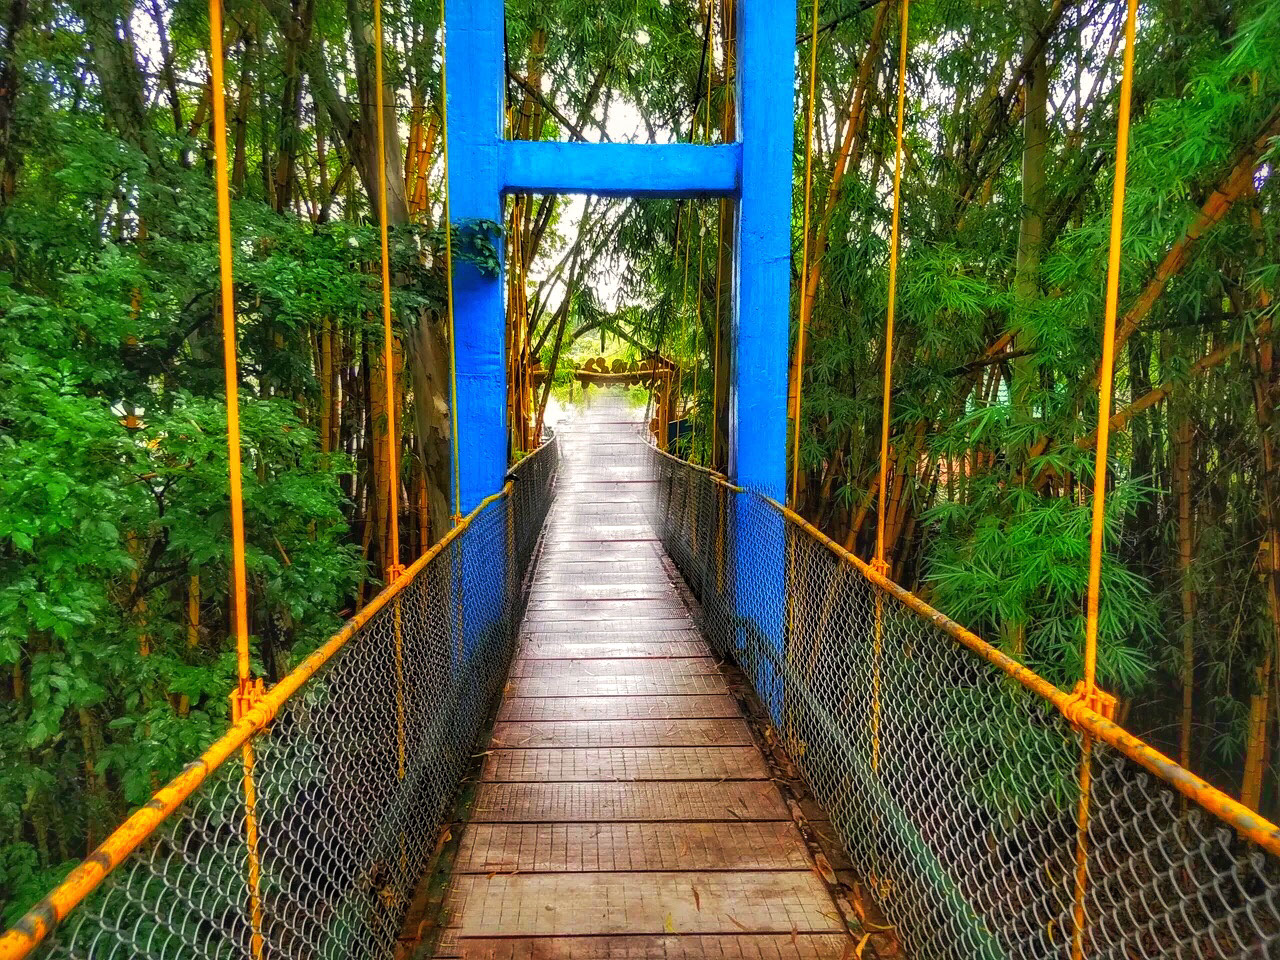 Enter Nisargadhama through a newly built suspension bridge